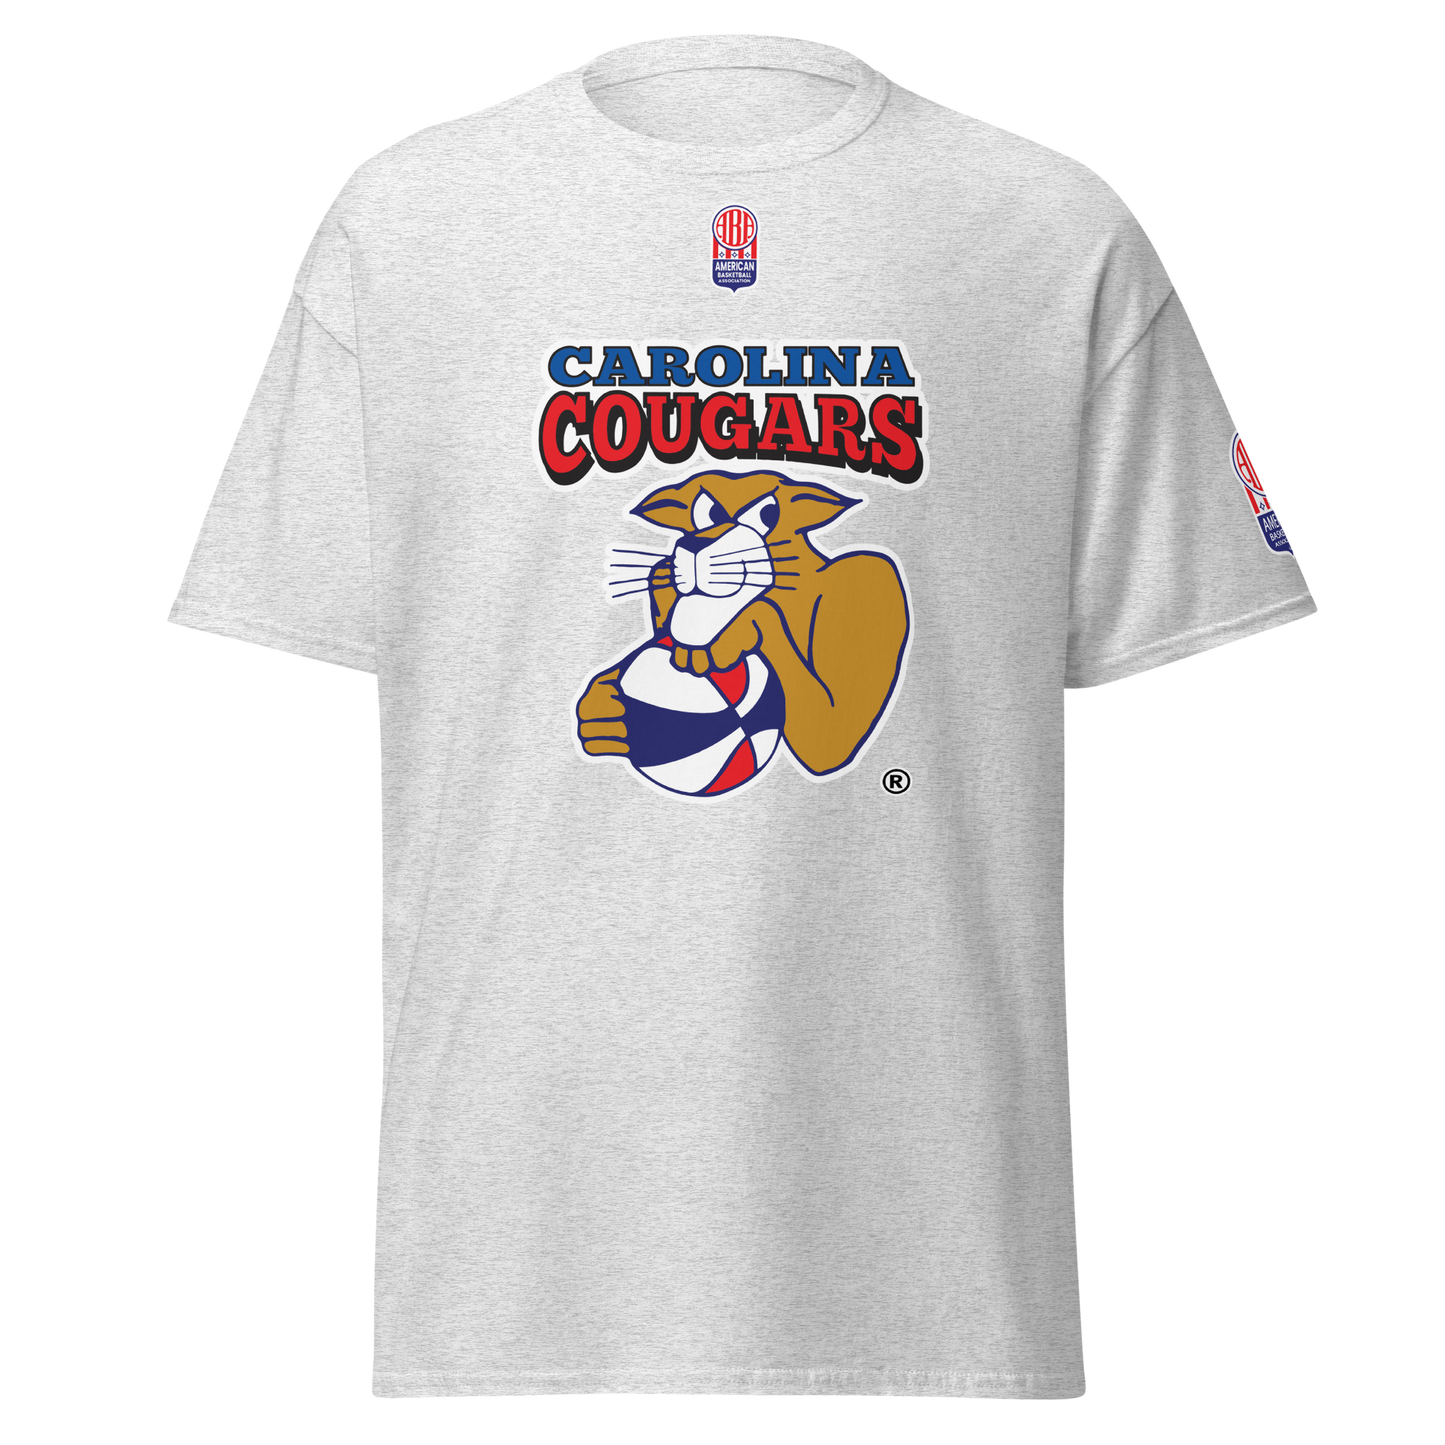 Carolina Cougars Oldschool ABA T-Shirt! 🏀✨